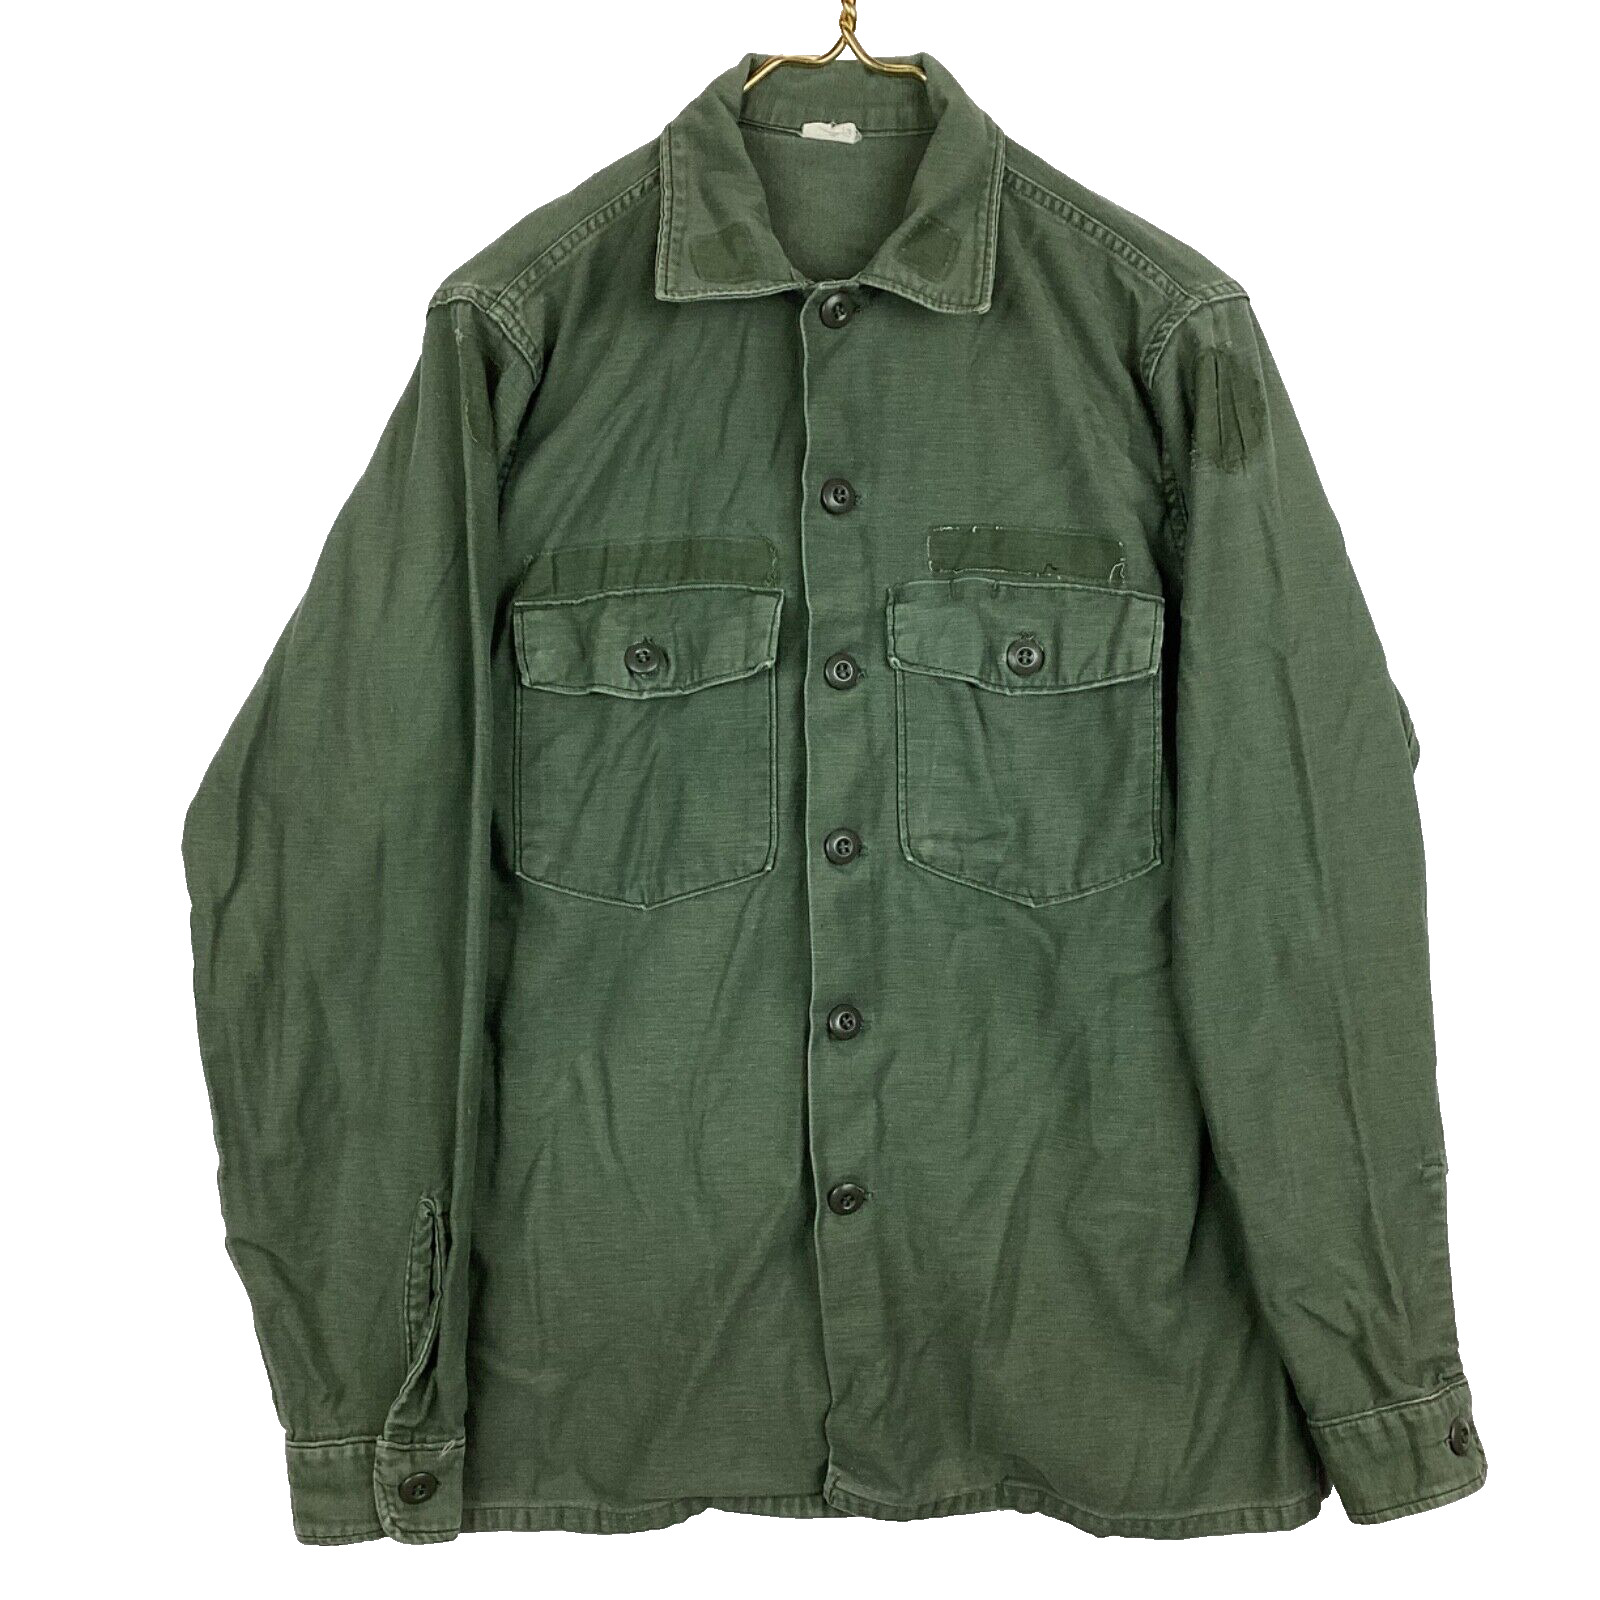 Vintage Us Army Og 107 Button Up Shirt Large Green 1971 70s Vietnam Era